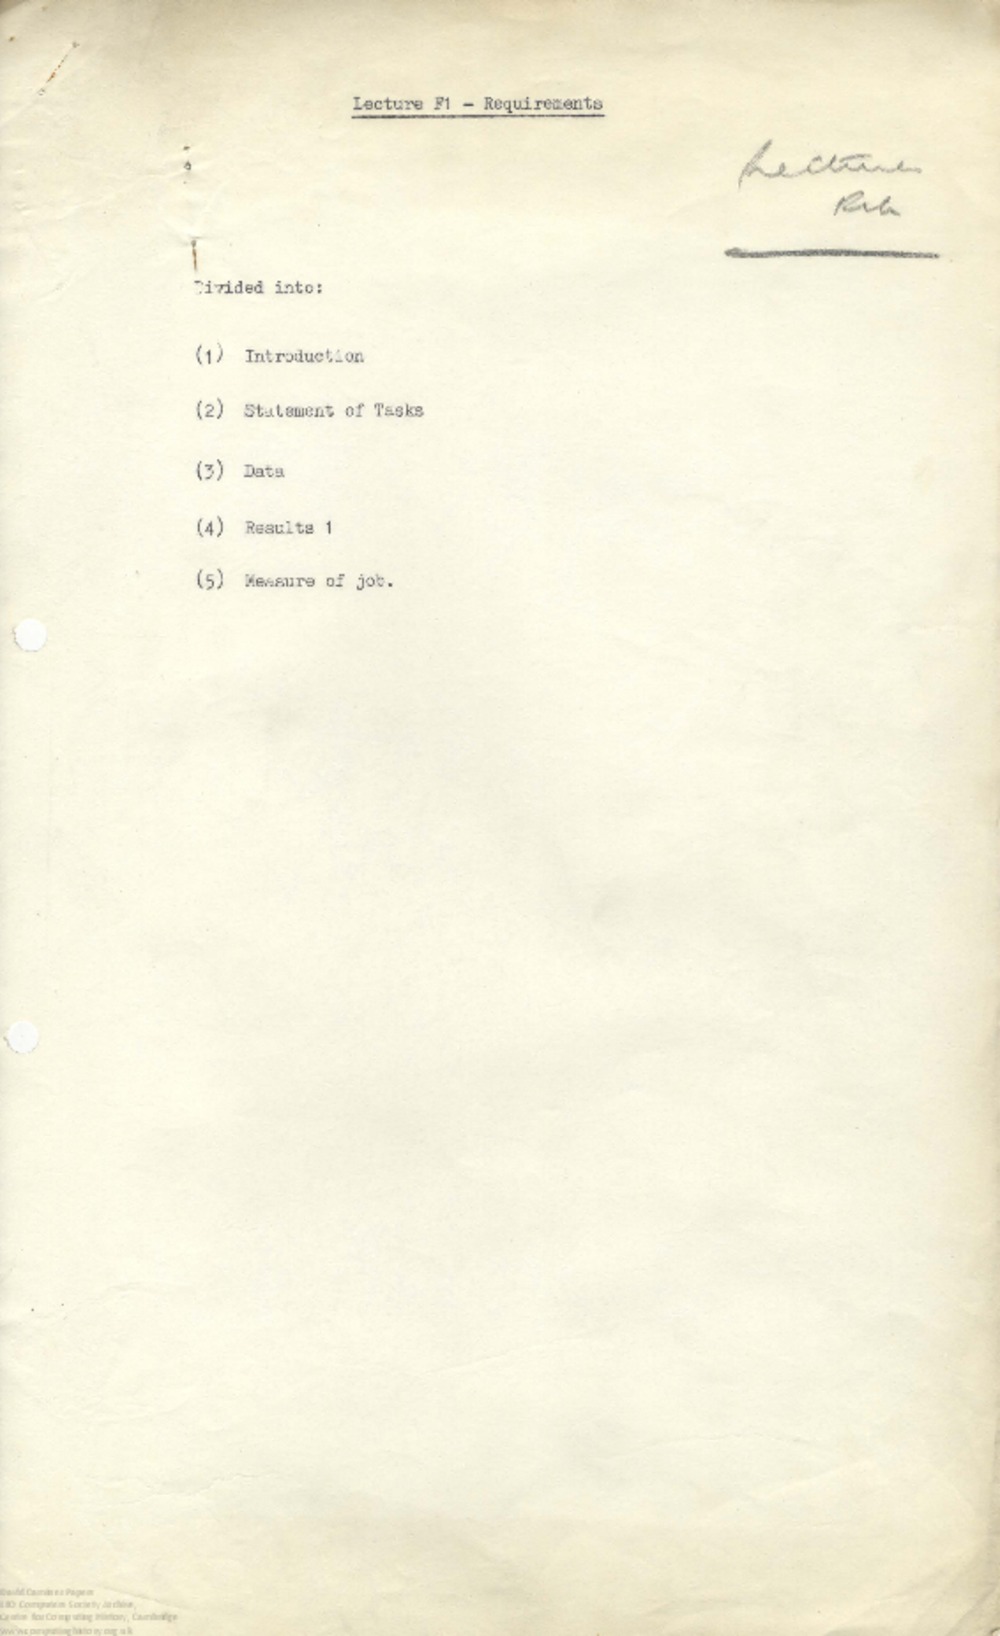 Article: 63976  F1 Lecture, 23 Feb 1956